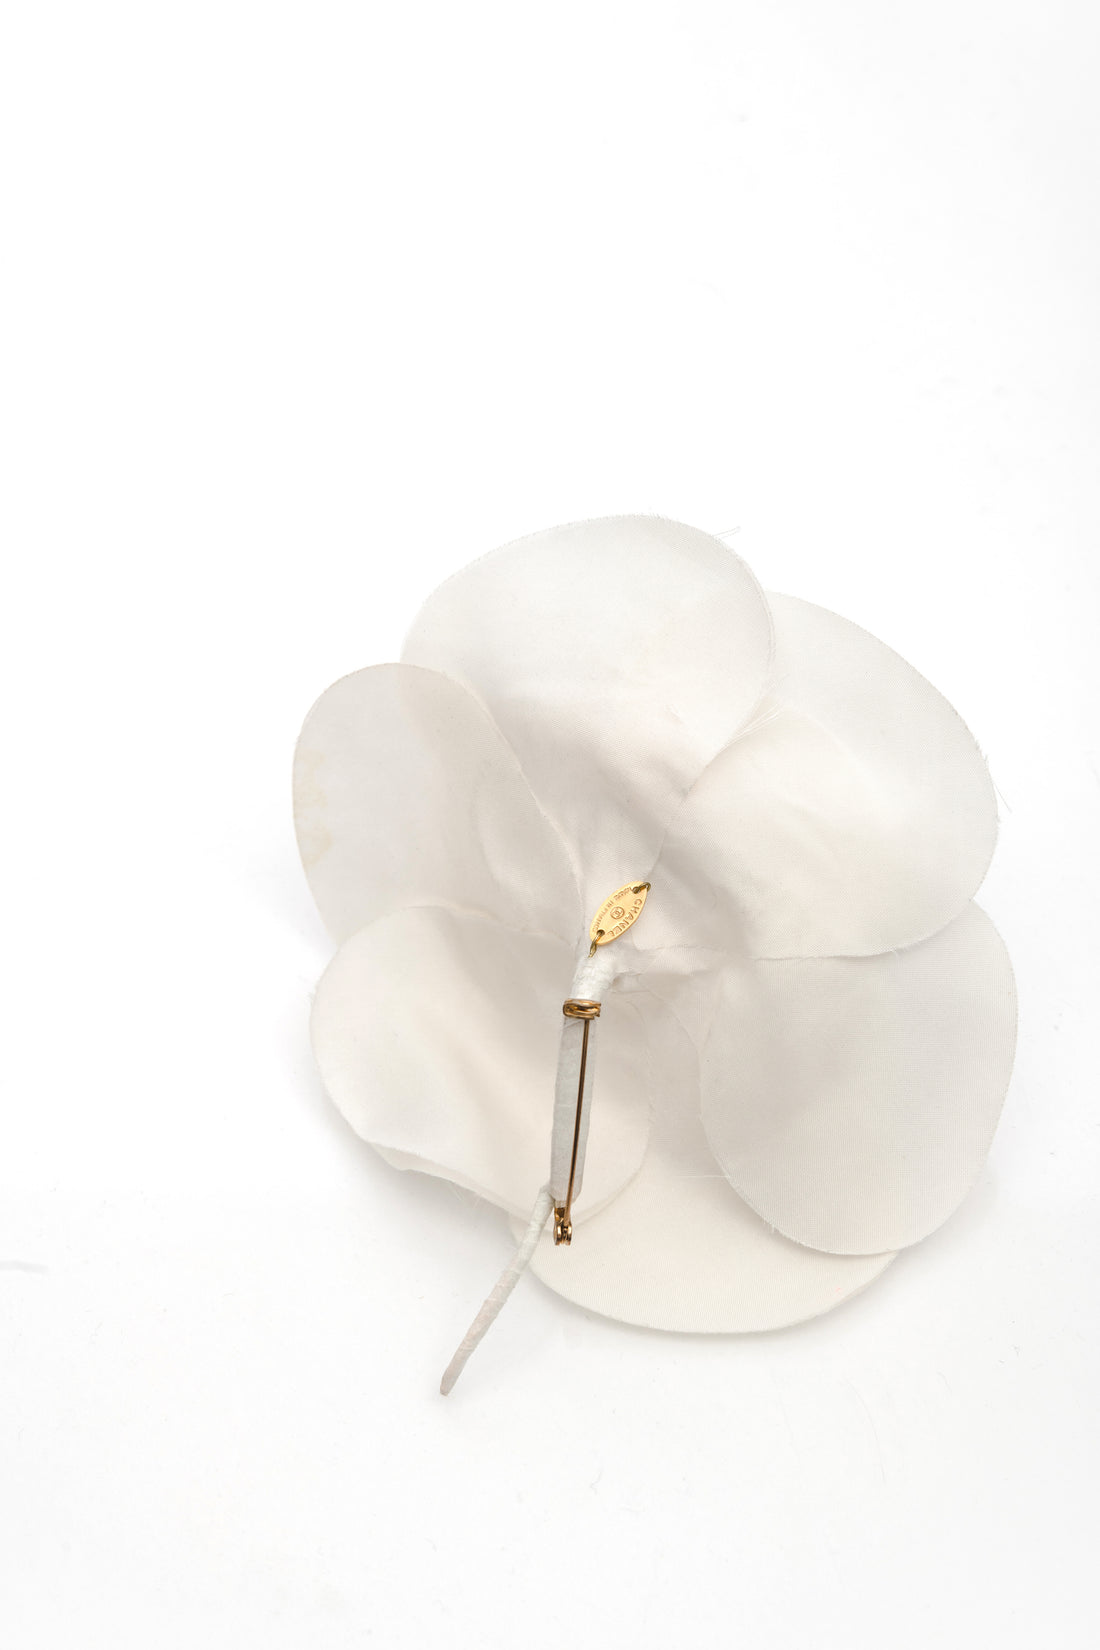 CHANEL White Camellia Brooch – The Paper Bag Princess Vintage